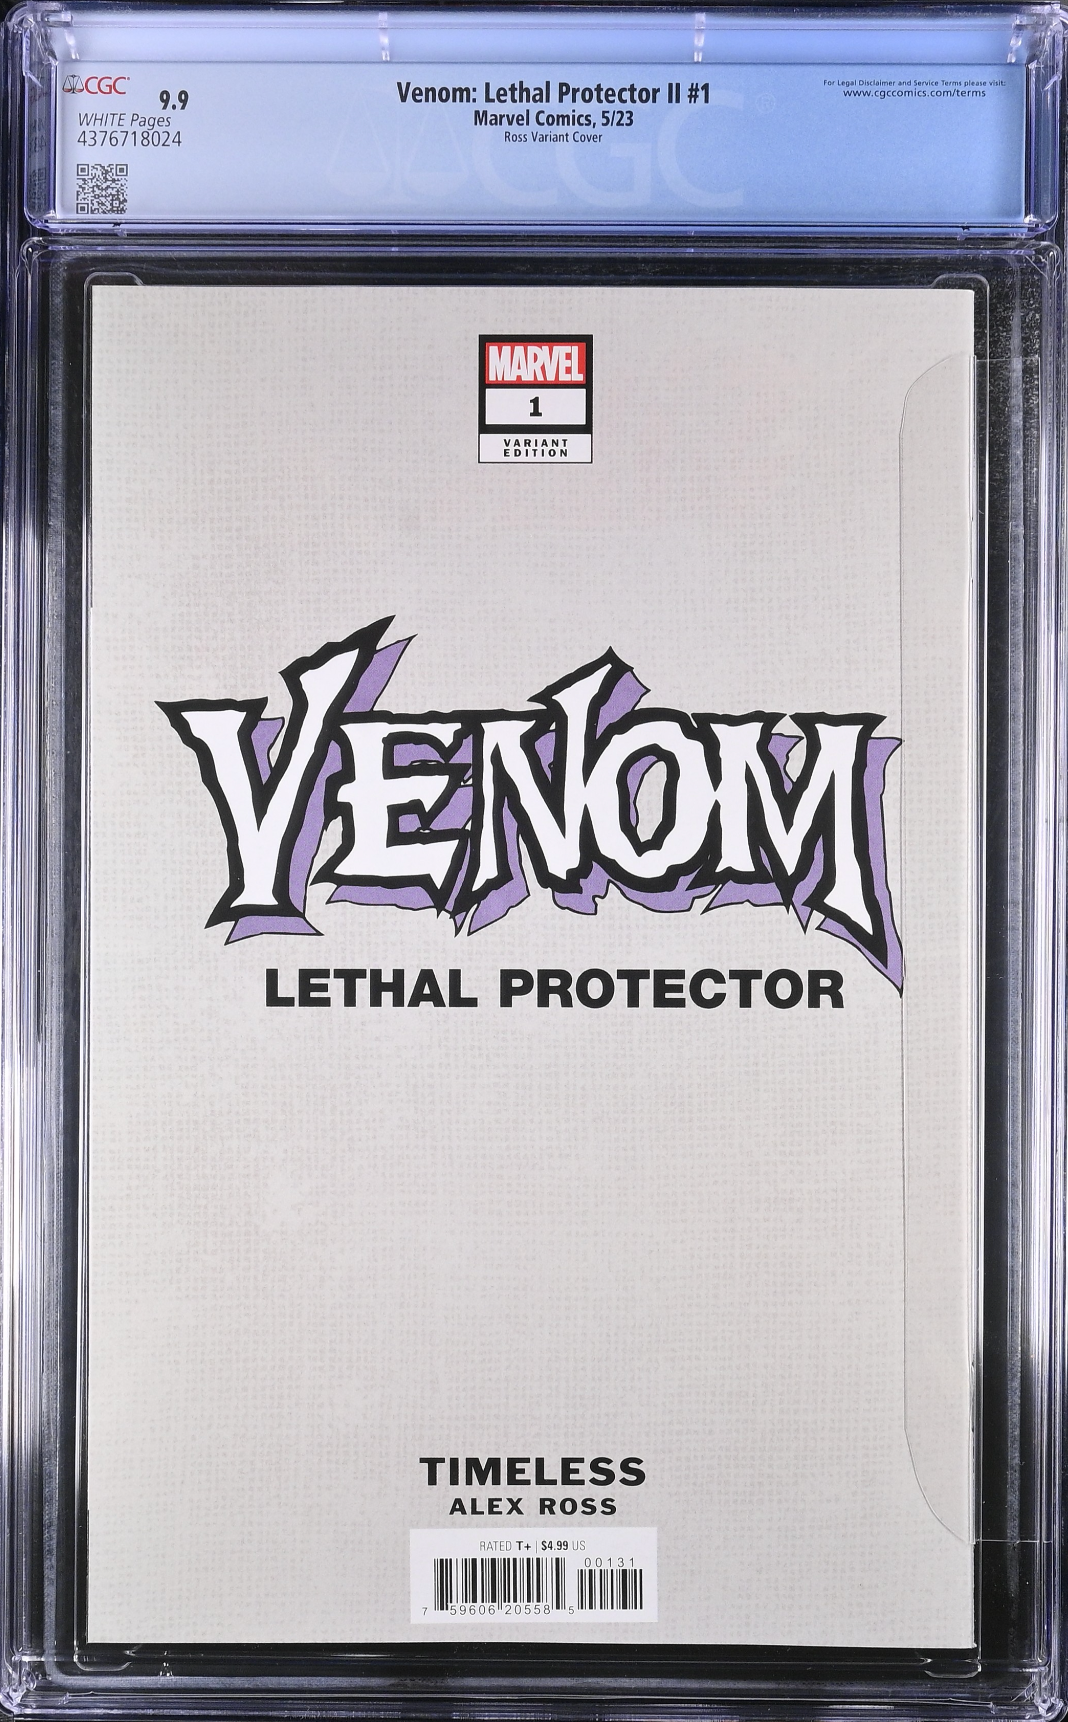 Venom: Lethal Protector II #1 Alex Ross Venom "Timeless" Variant CGC 9.9